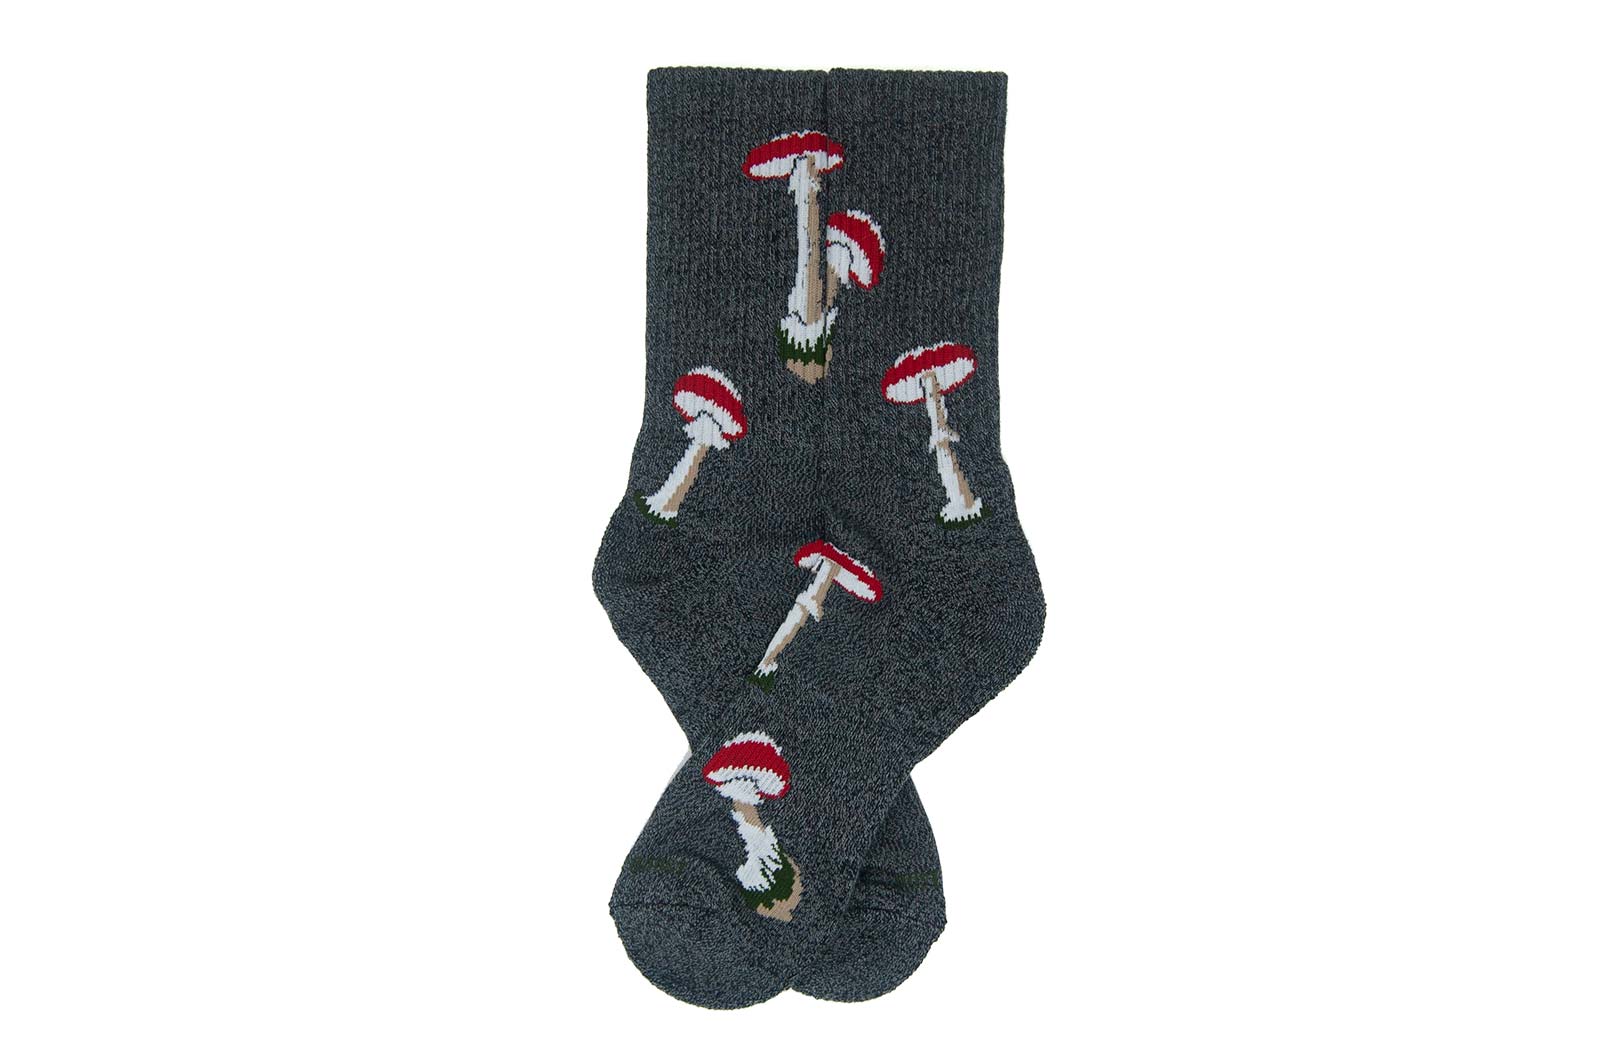 FUNGI Socks - Charcoal